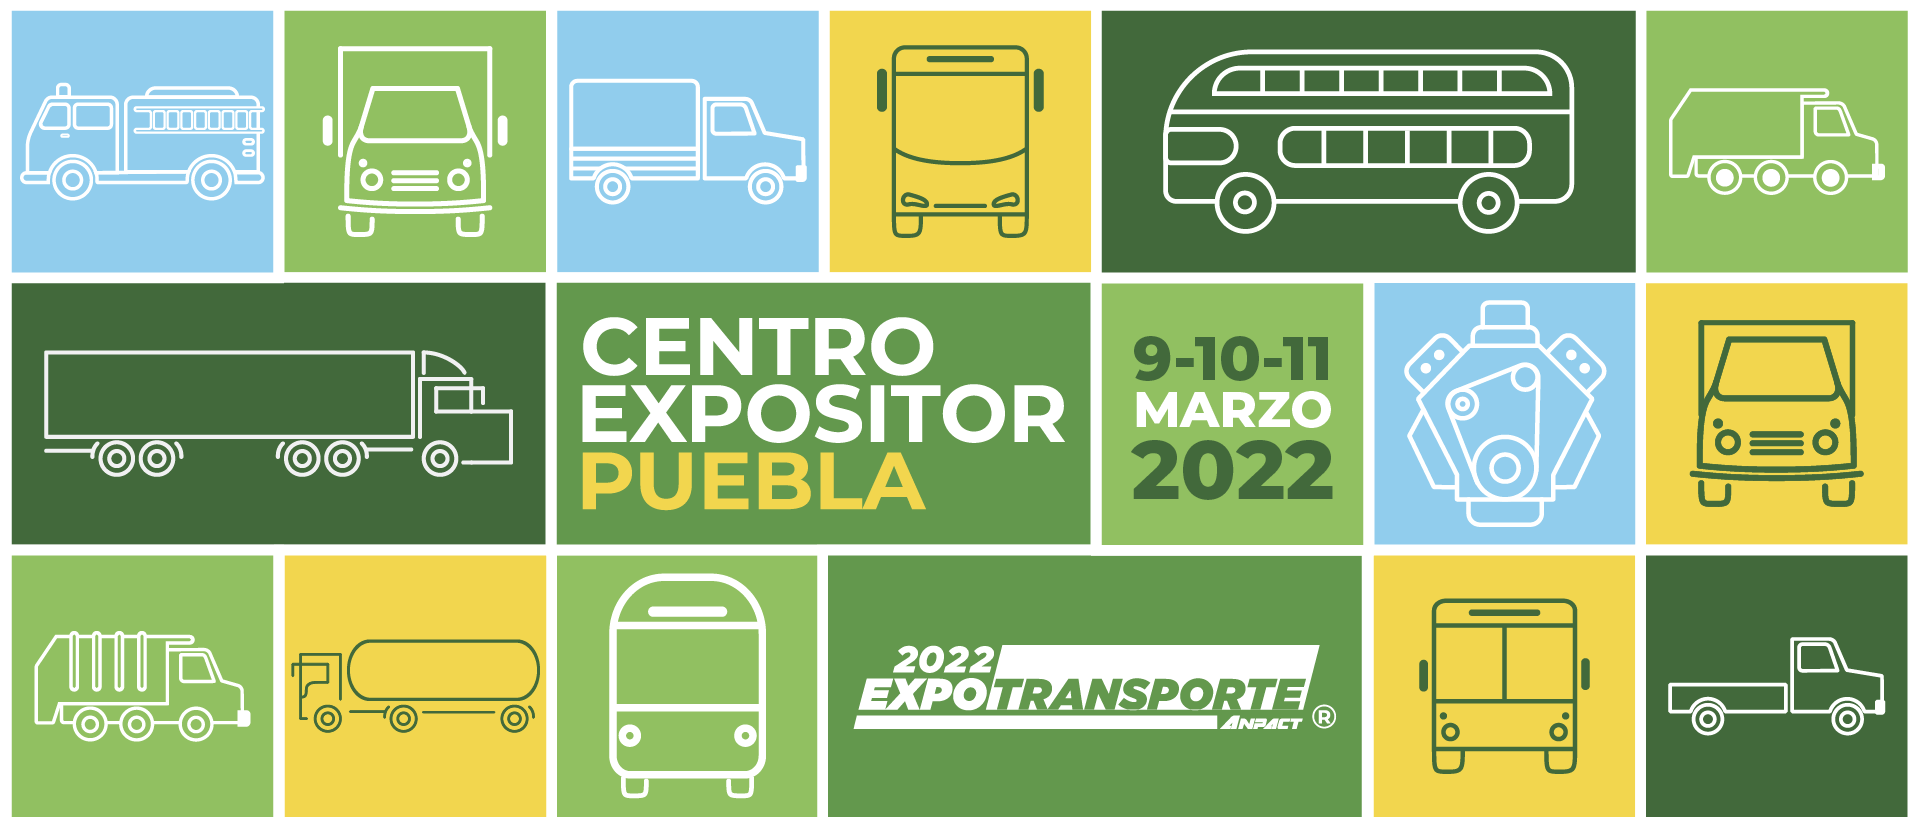 ENSA presente en la Expo Transporte ANPACT 2022